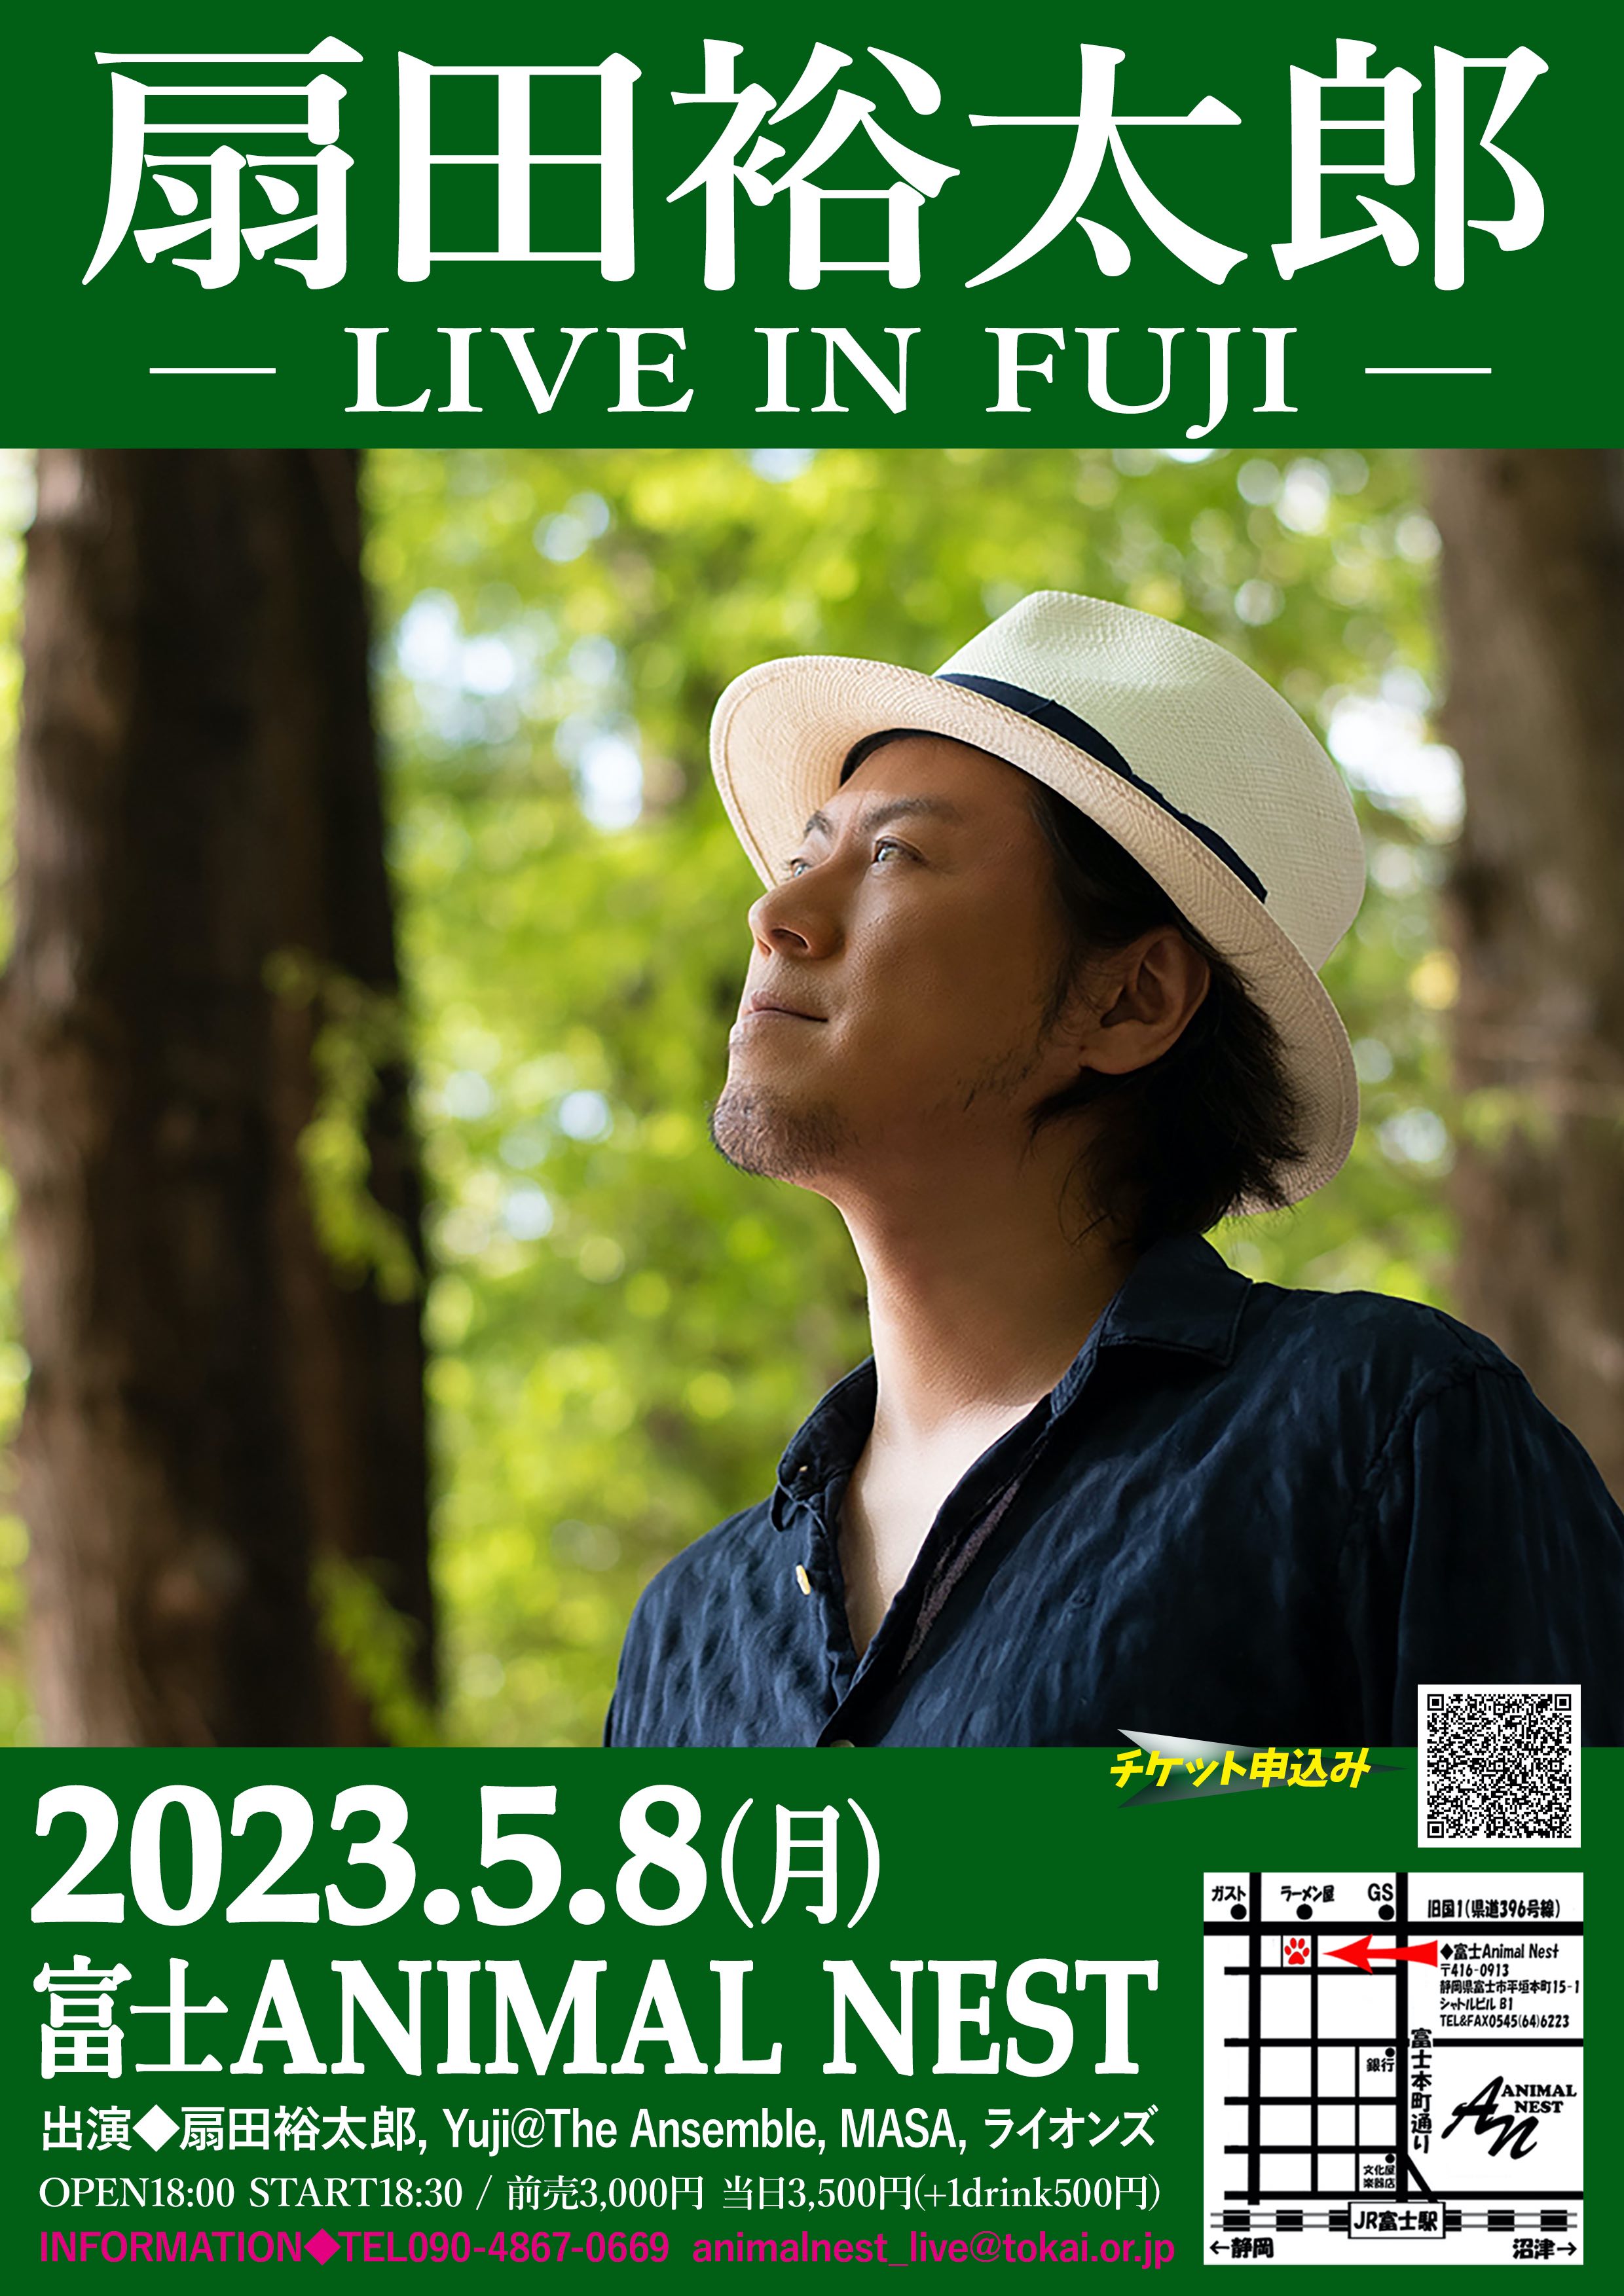 5/8(mon) 扇田裕太郎 Live at Fuji【富士ANIMAL NEST からLIVE配信】